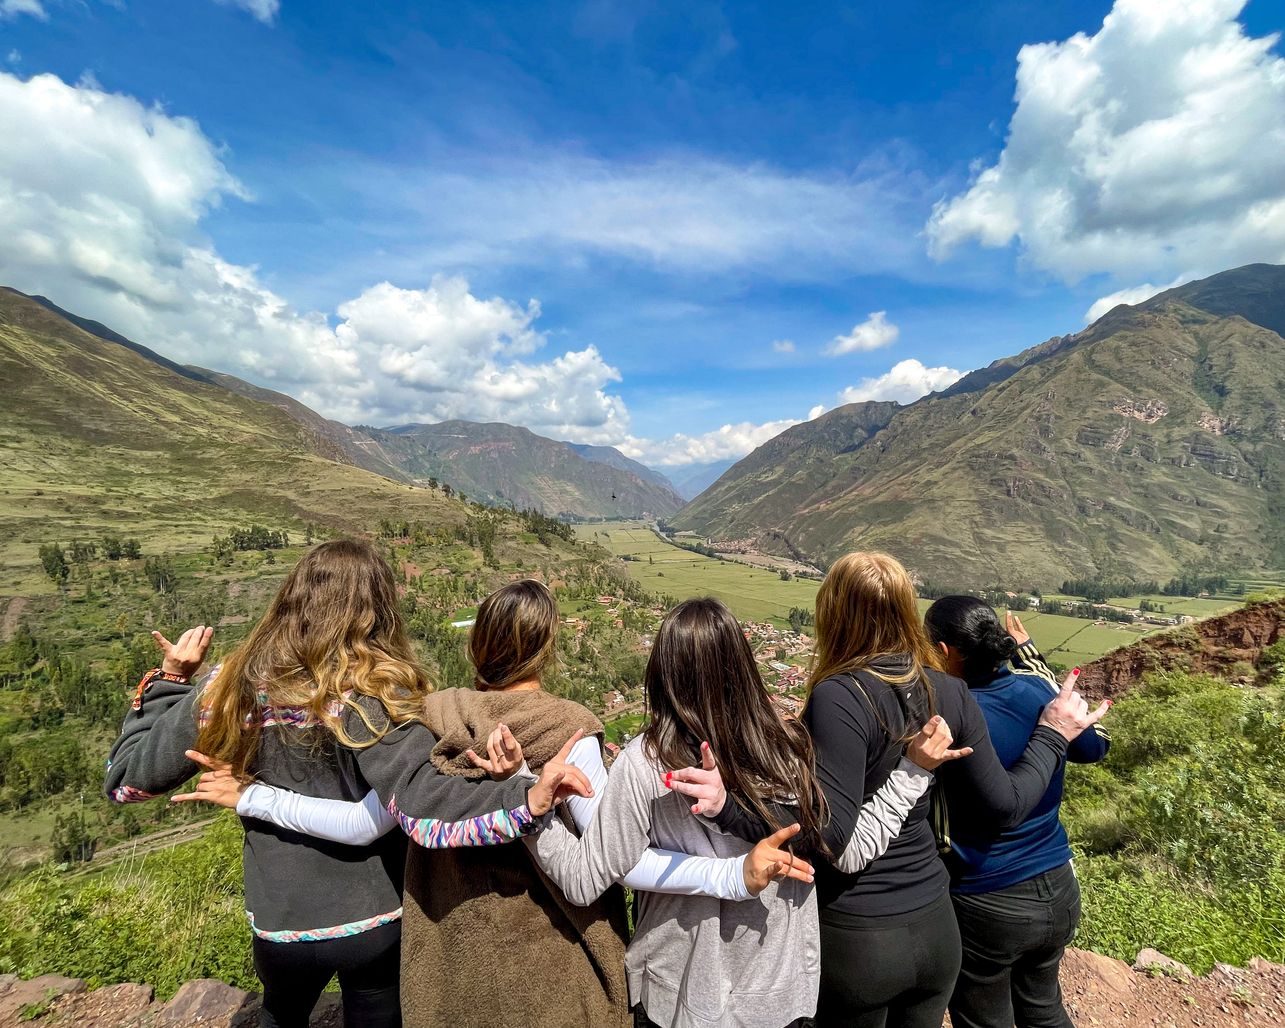 10 Things to do in Peru Besides Machu Picchu